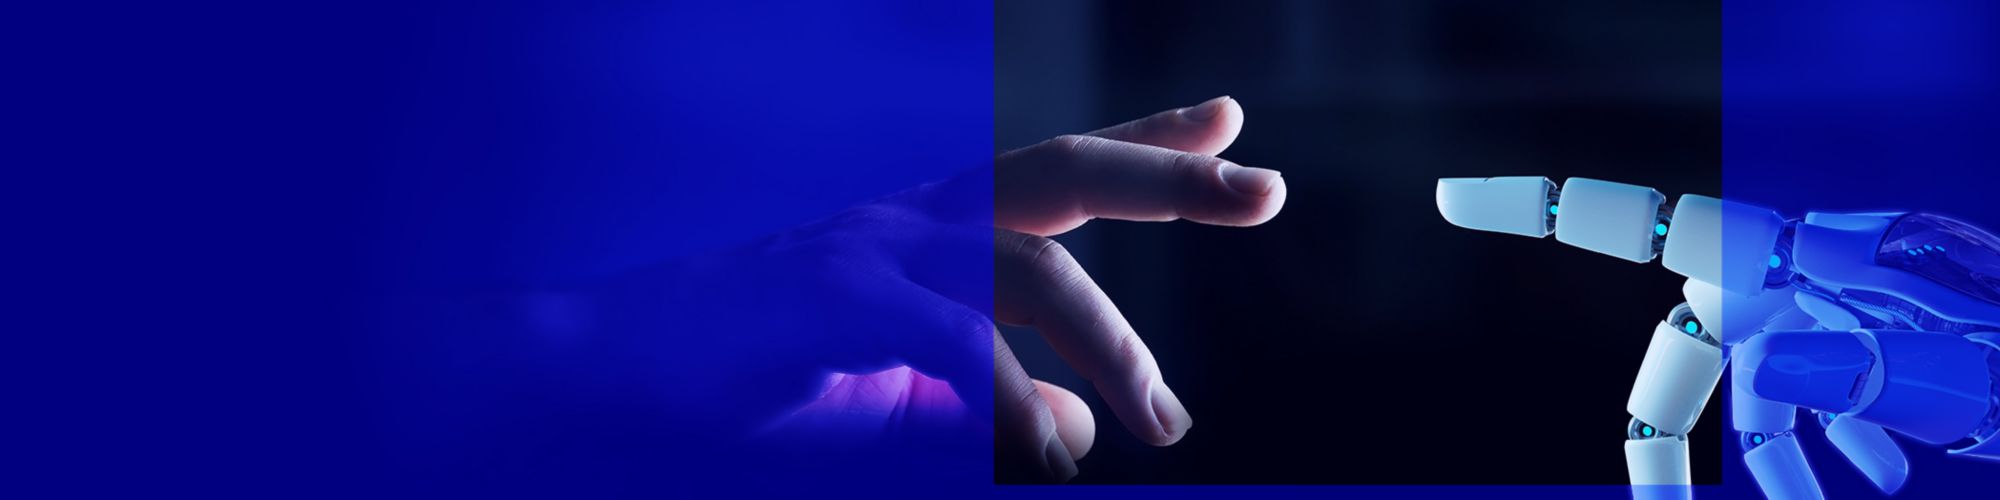 Doigt humain touchant presque un doigt de robot